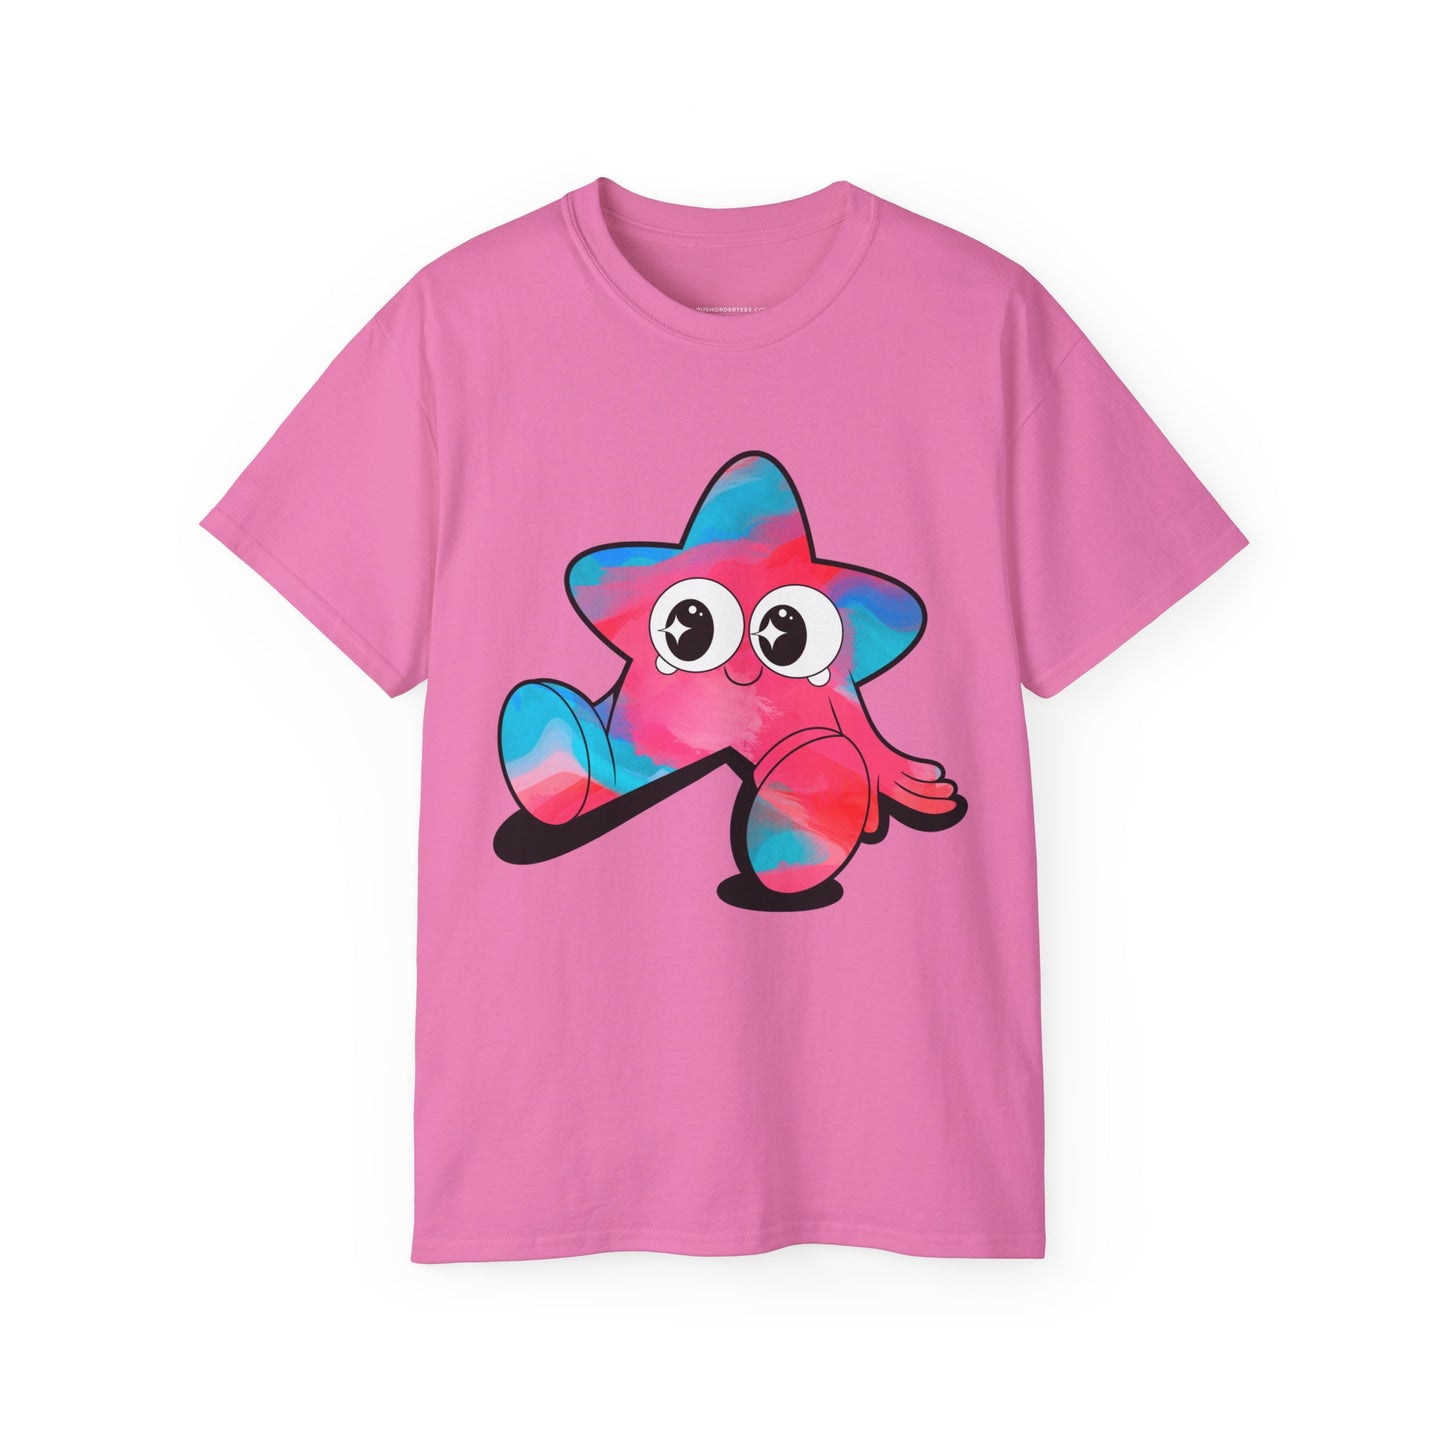 Cotton Candy Star T-Shirt